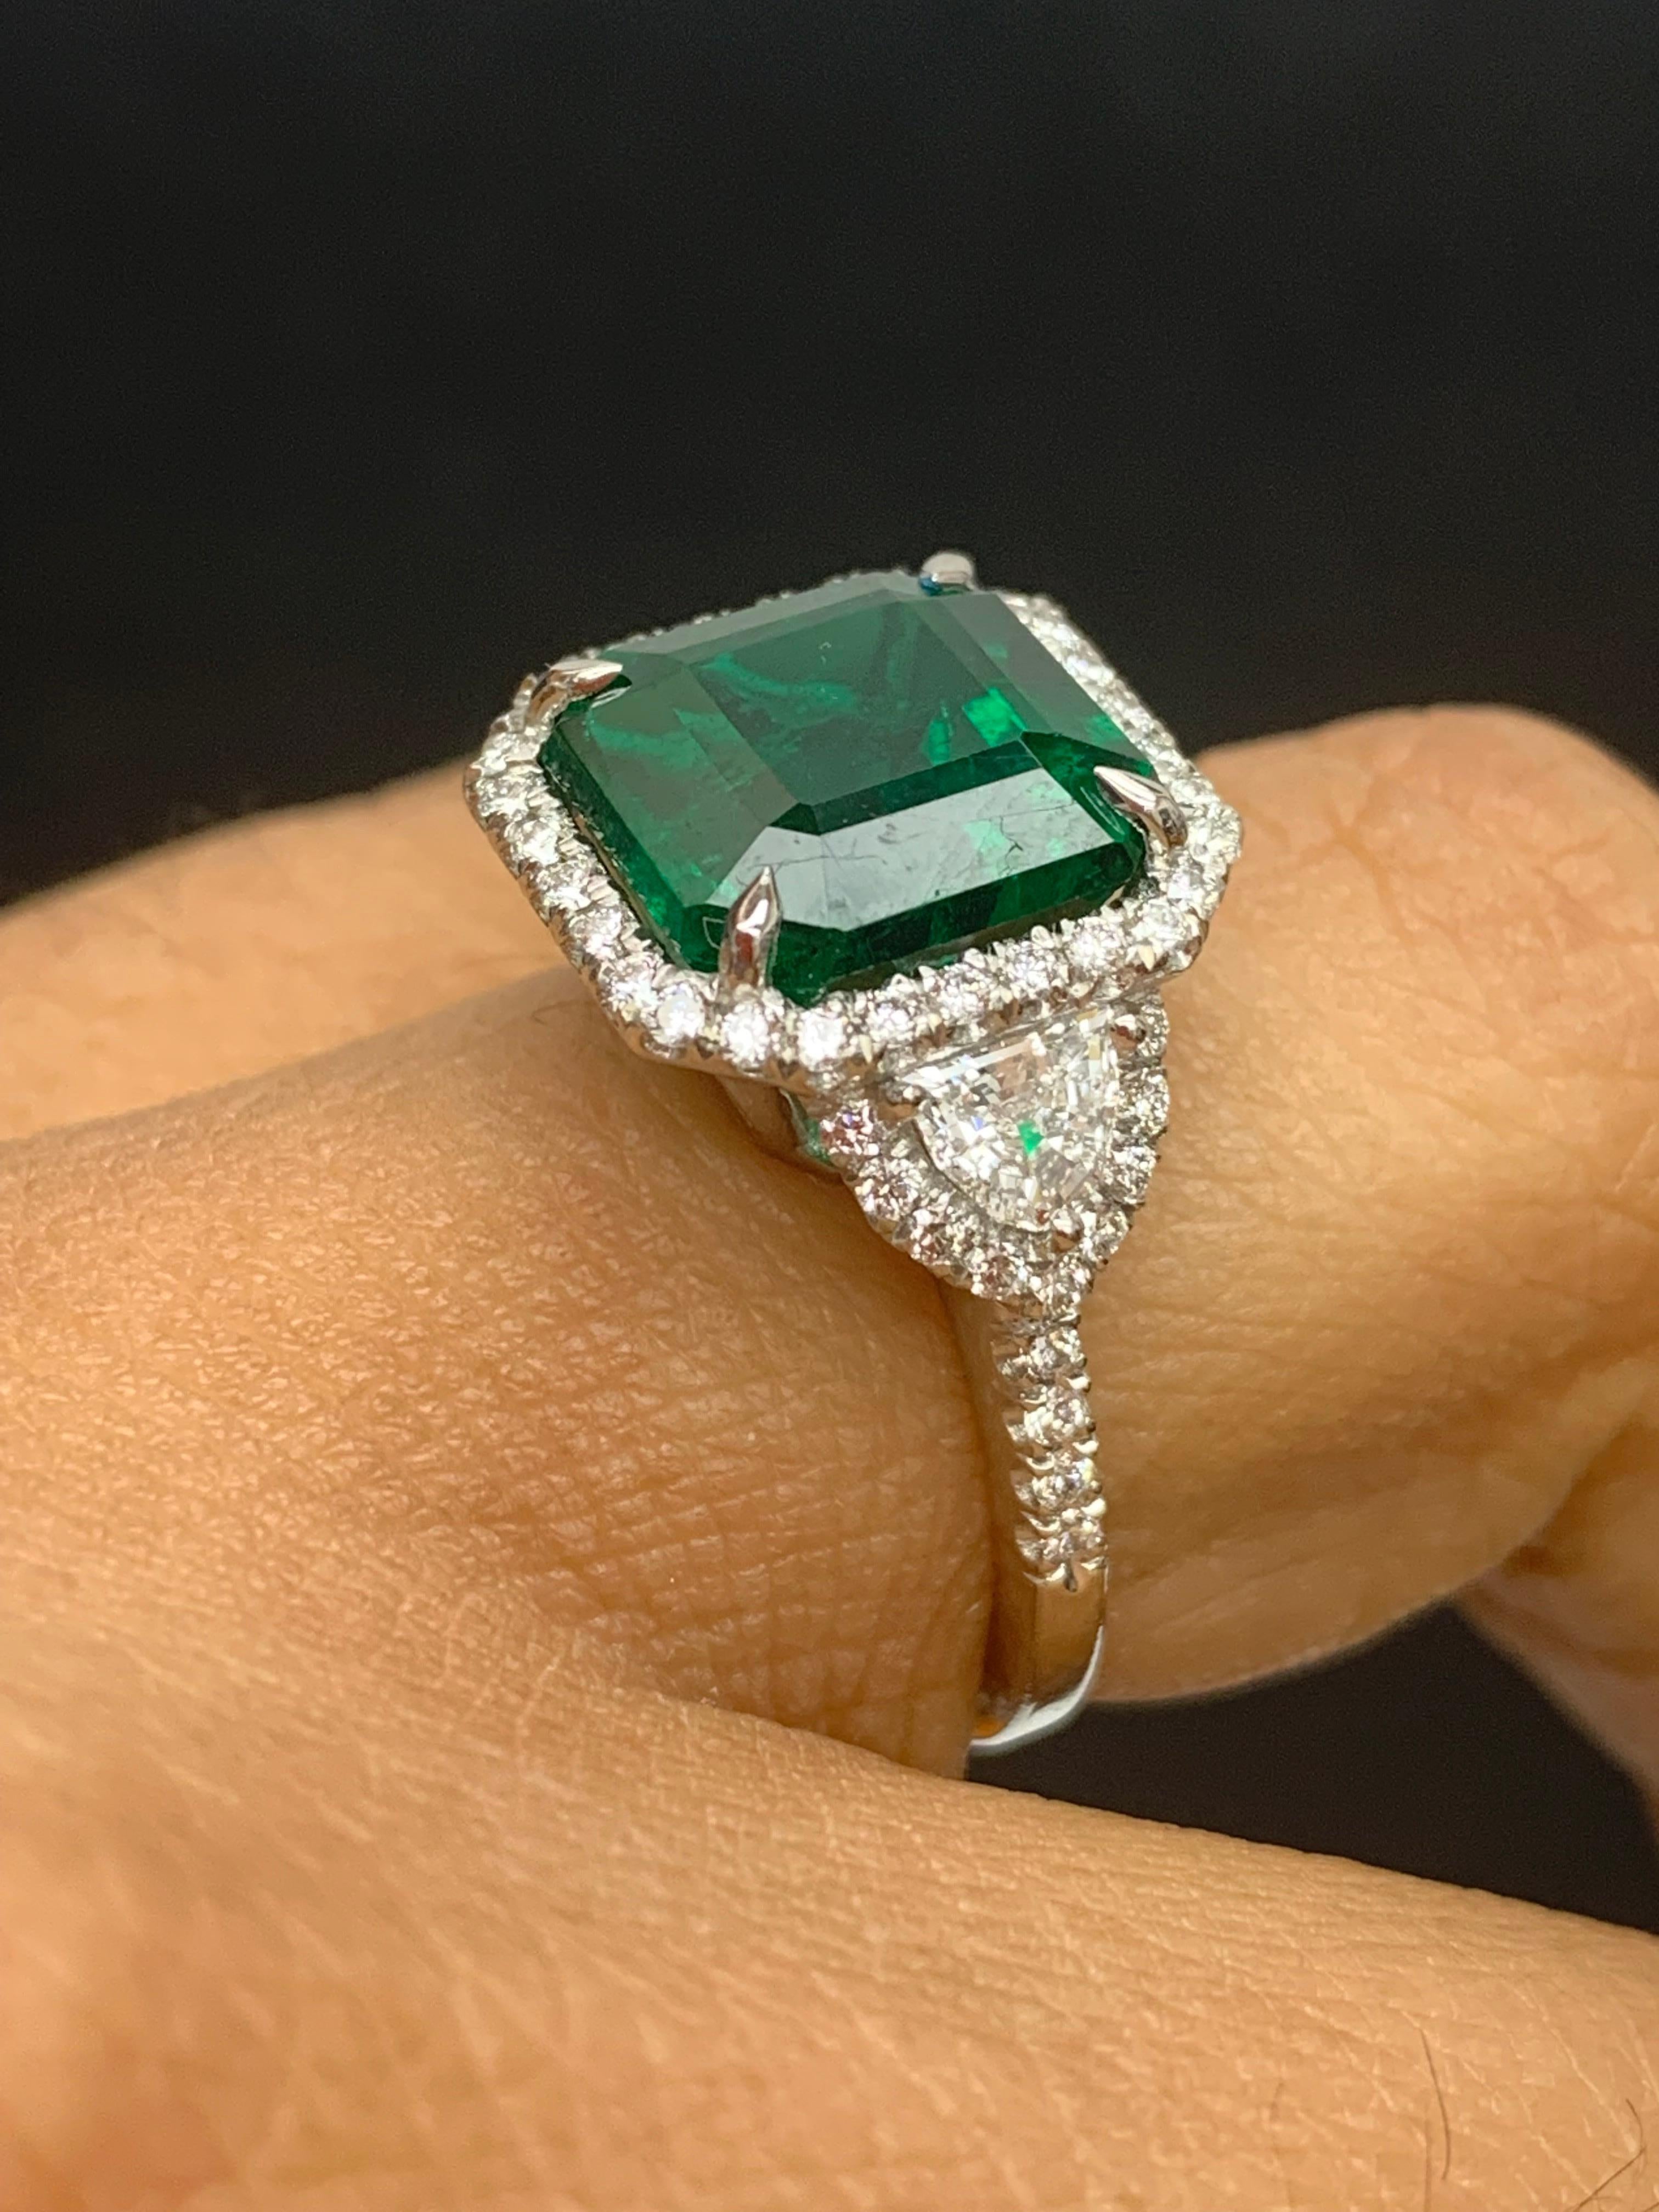 Women's Certified 5.23 Carat Emerald Cut Emerald Diamond 3 Stone Halo Ring in Platinum For Sale